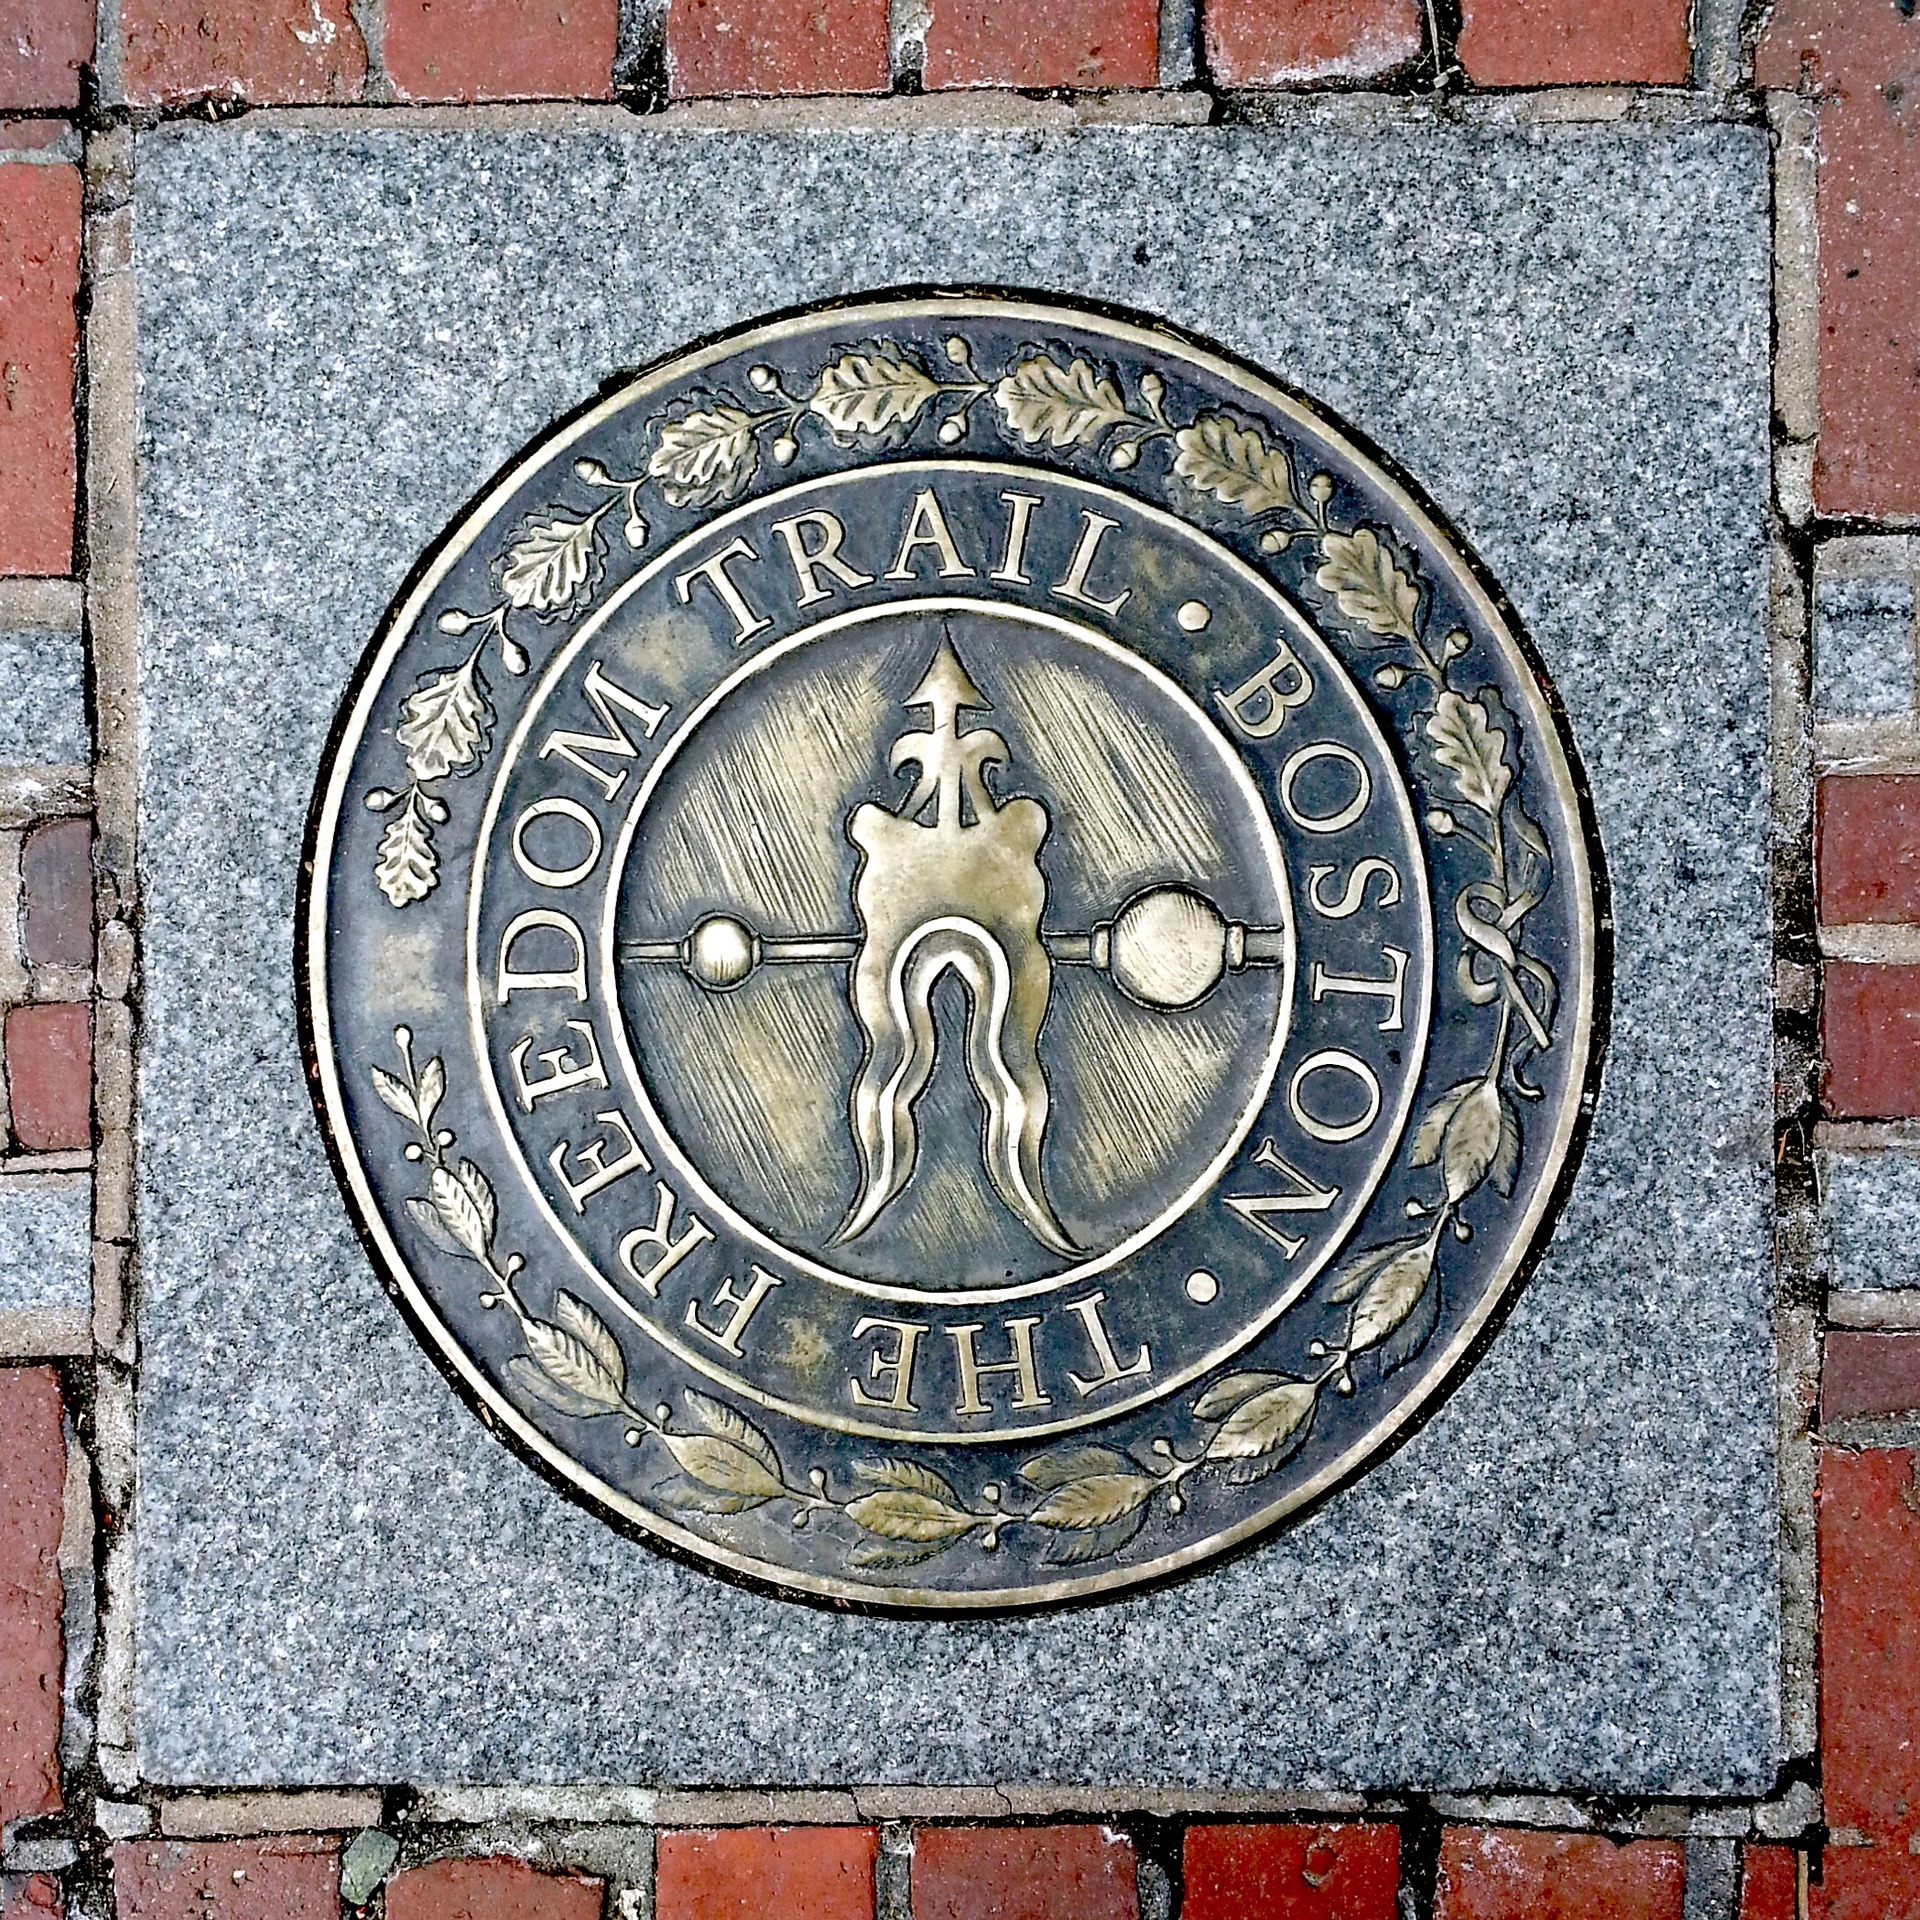 Freedom Trail in Boston, Massachusetts